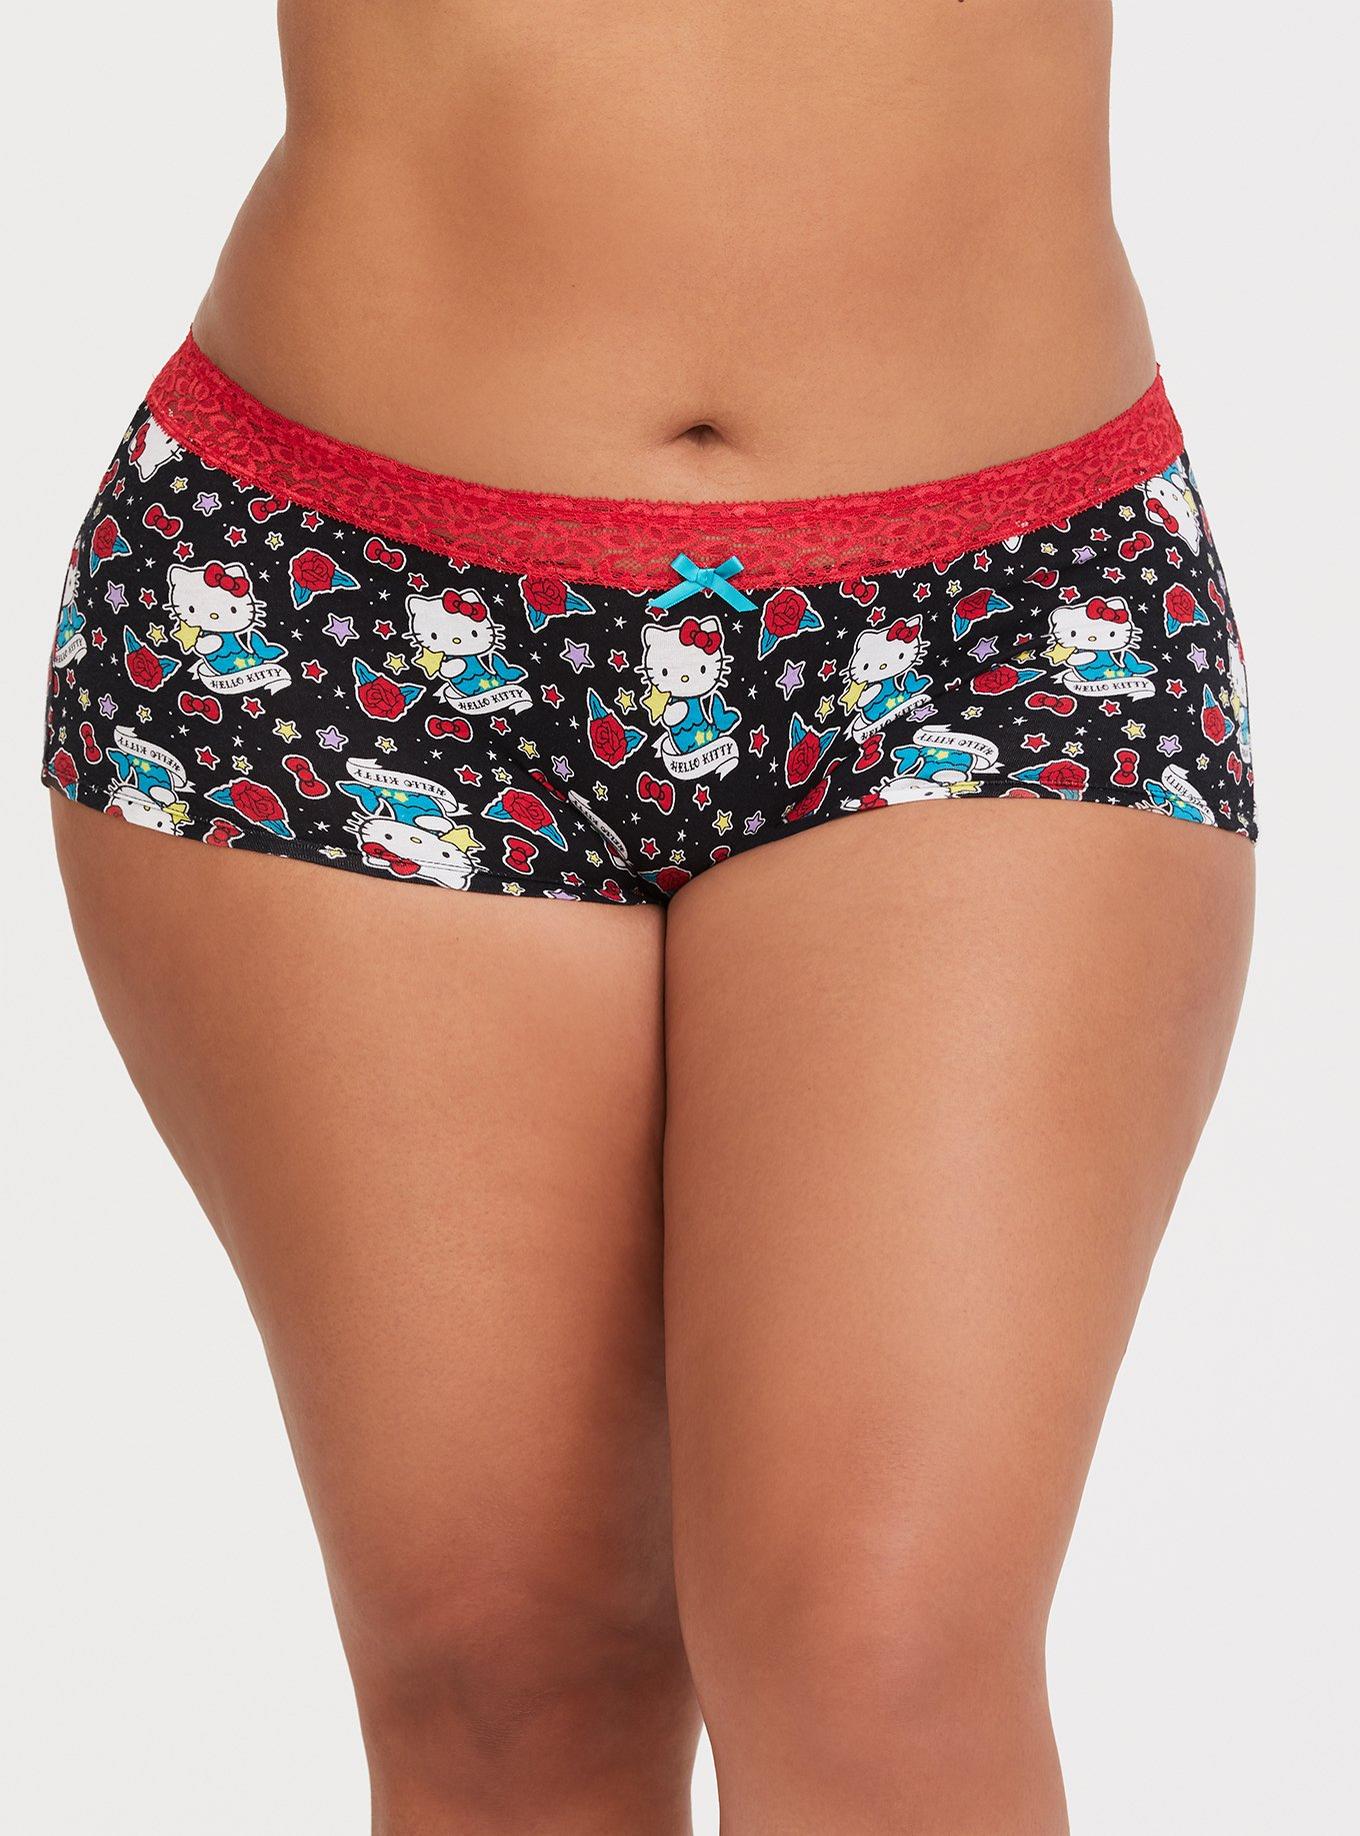 Hello Kitty Black Monogram Underwear Boxer Pants-L-NWT!